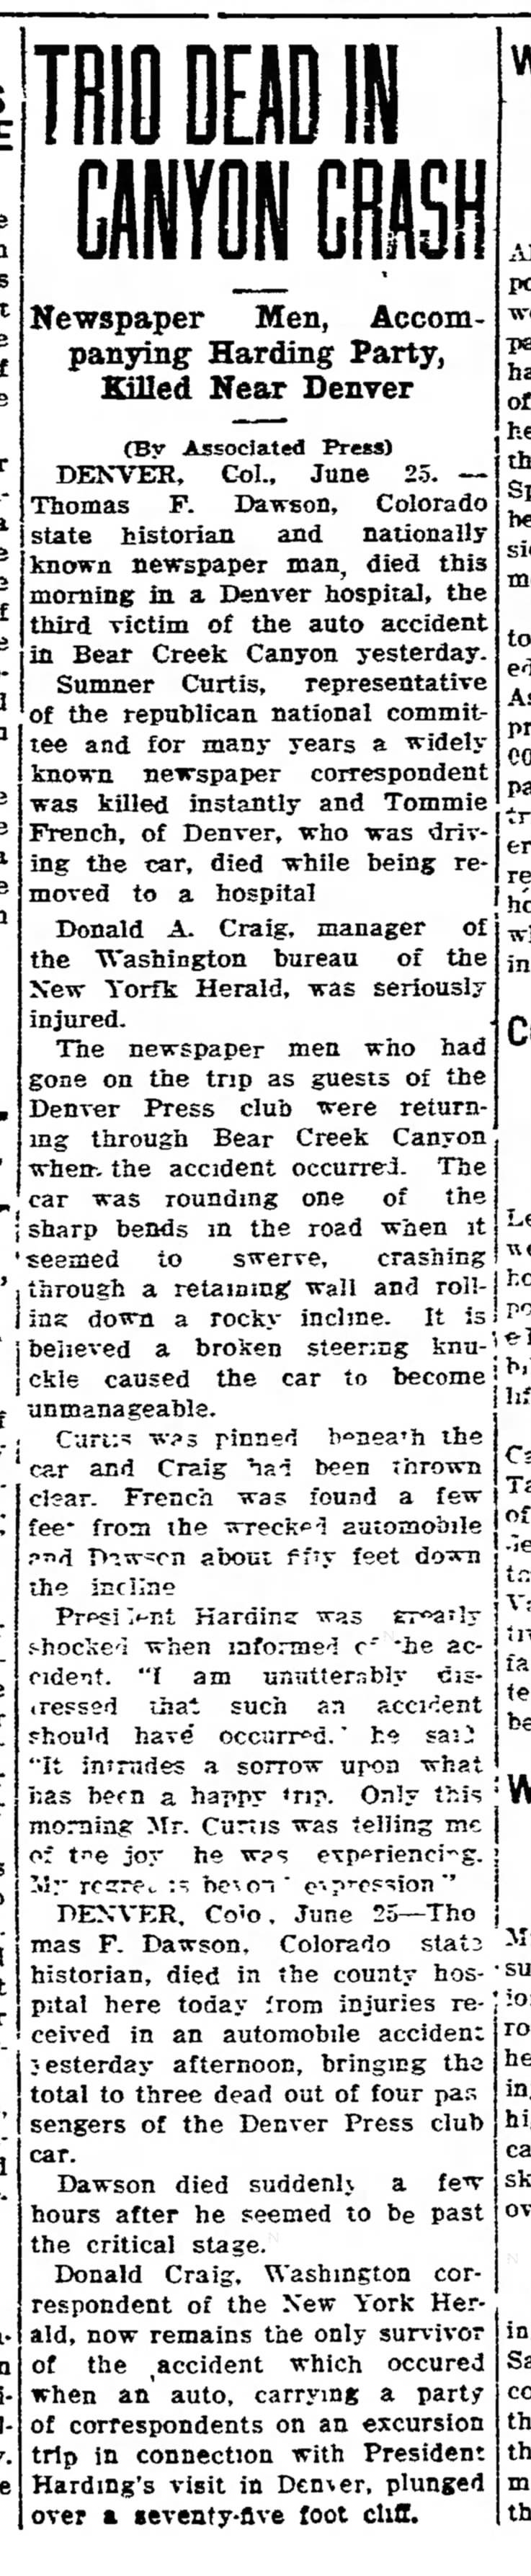 Iowa City Press-Citizen
(Iowa City, Iowa)
25 June 1923, p1